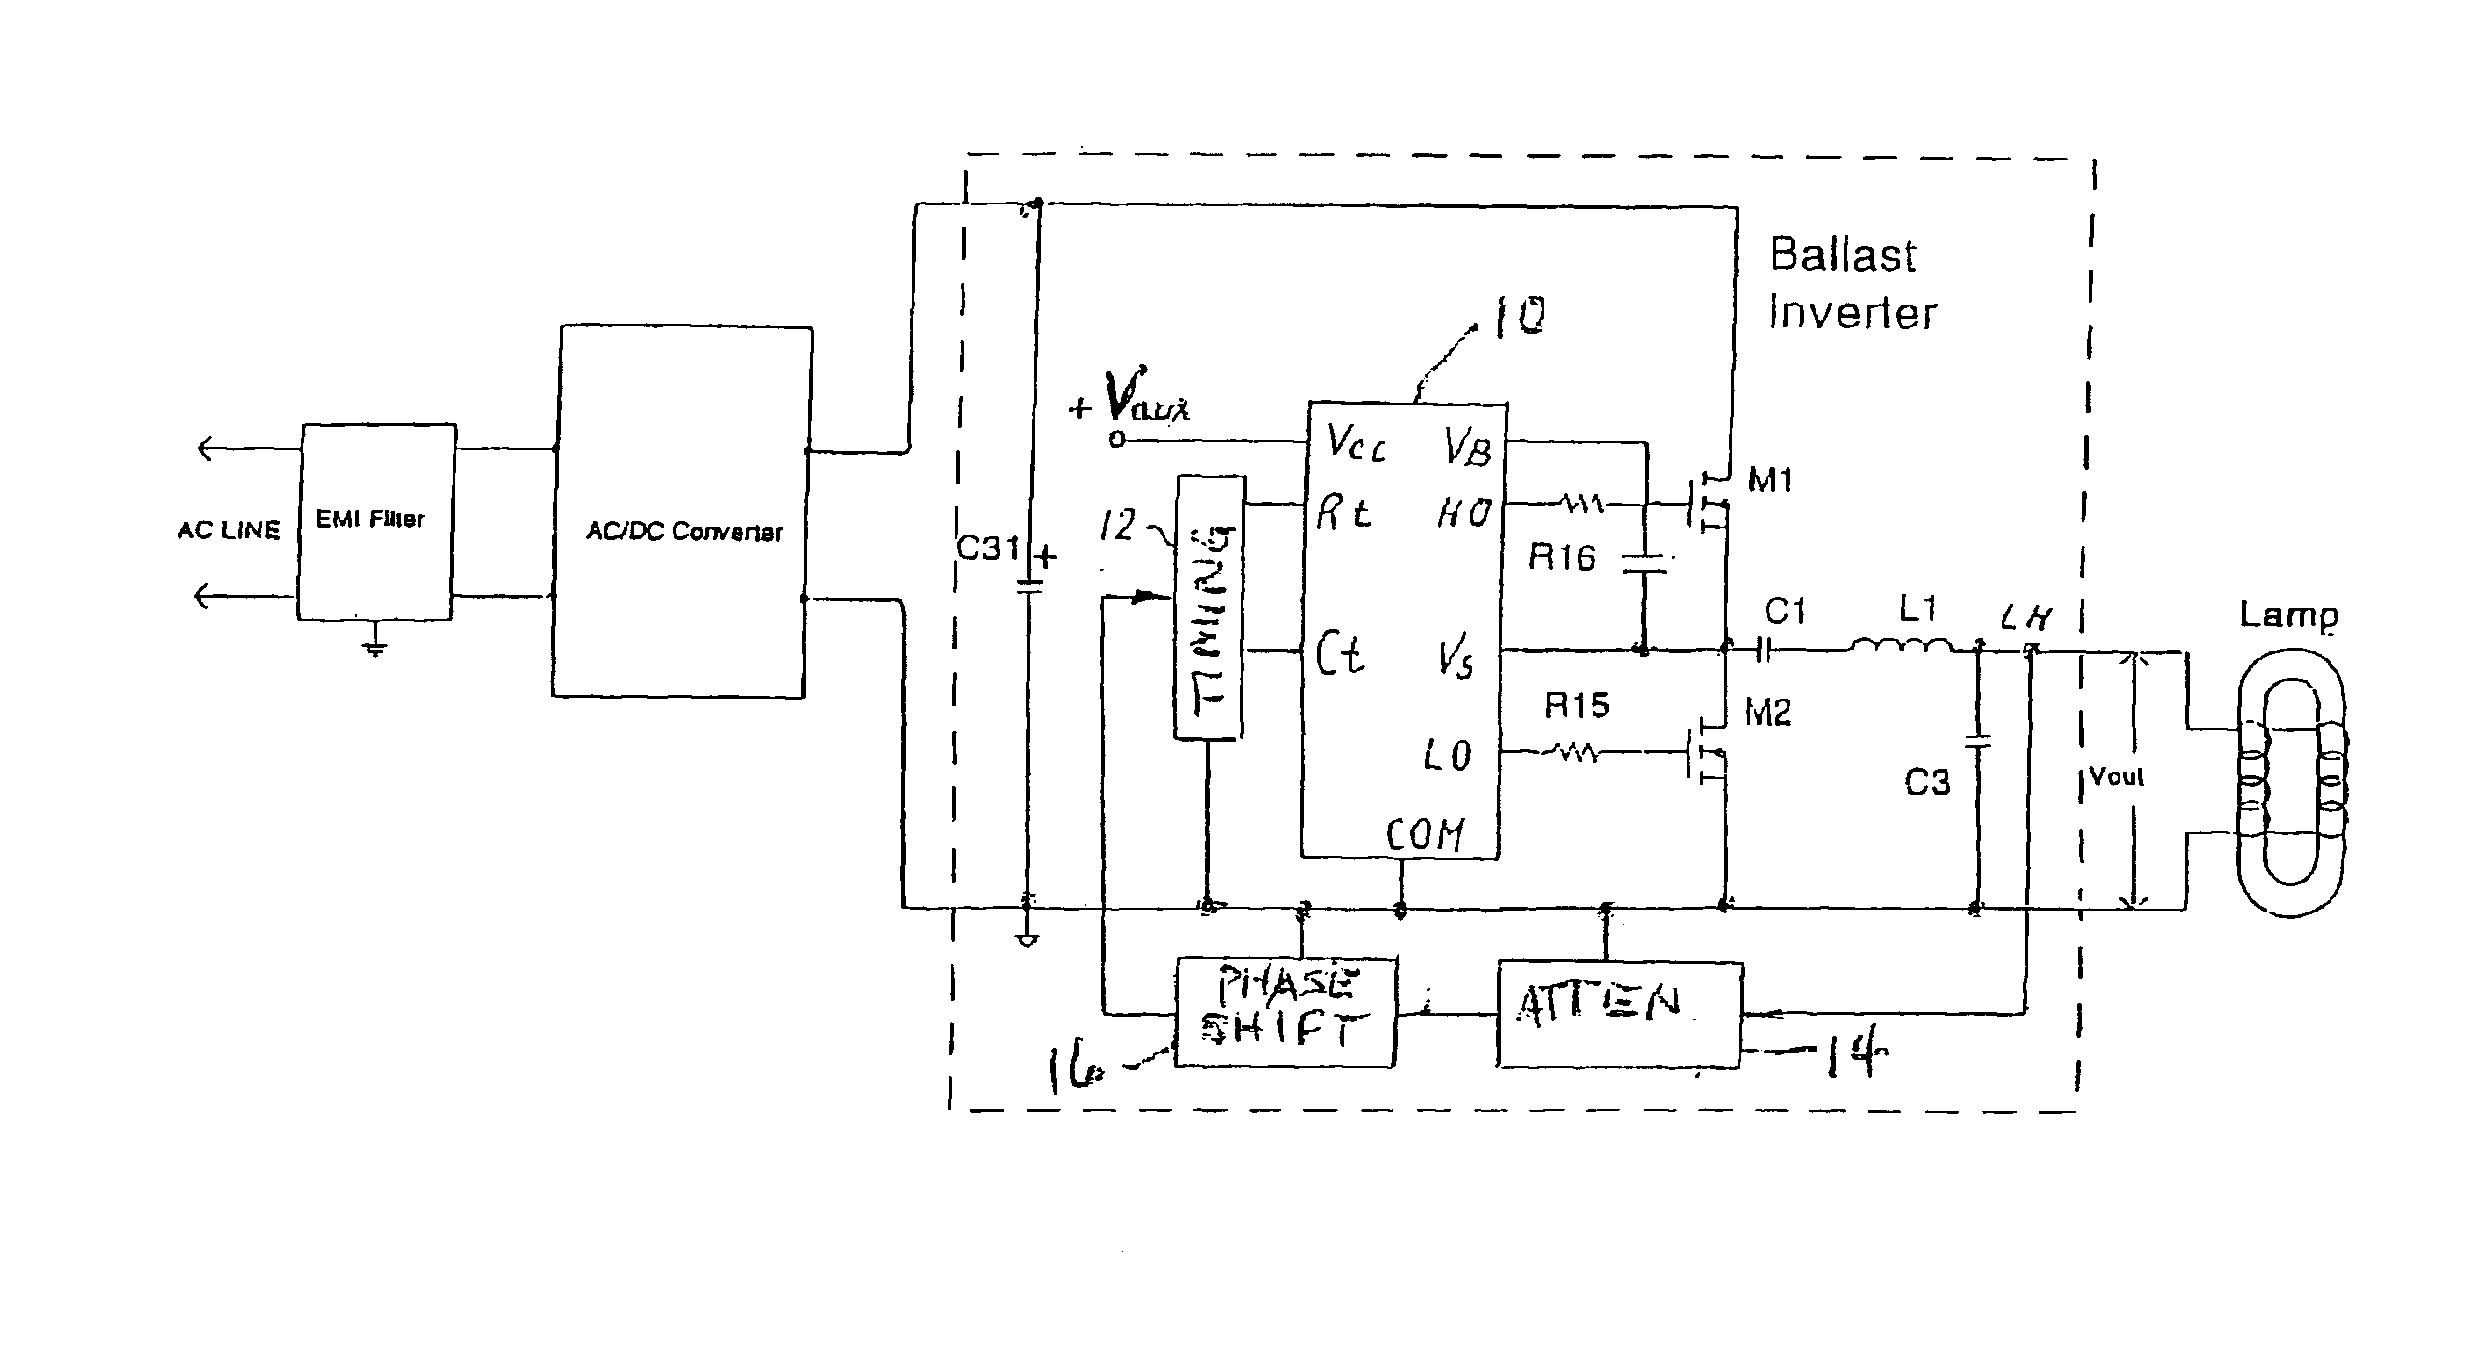 Feedback circuit and method of operating ballast resonant inverter